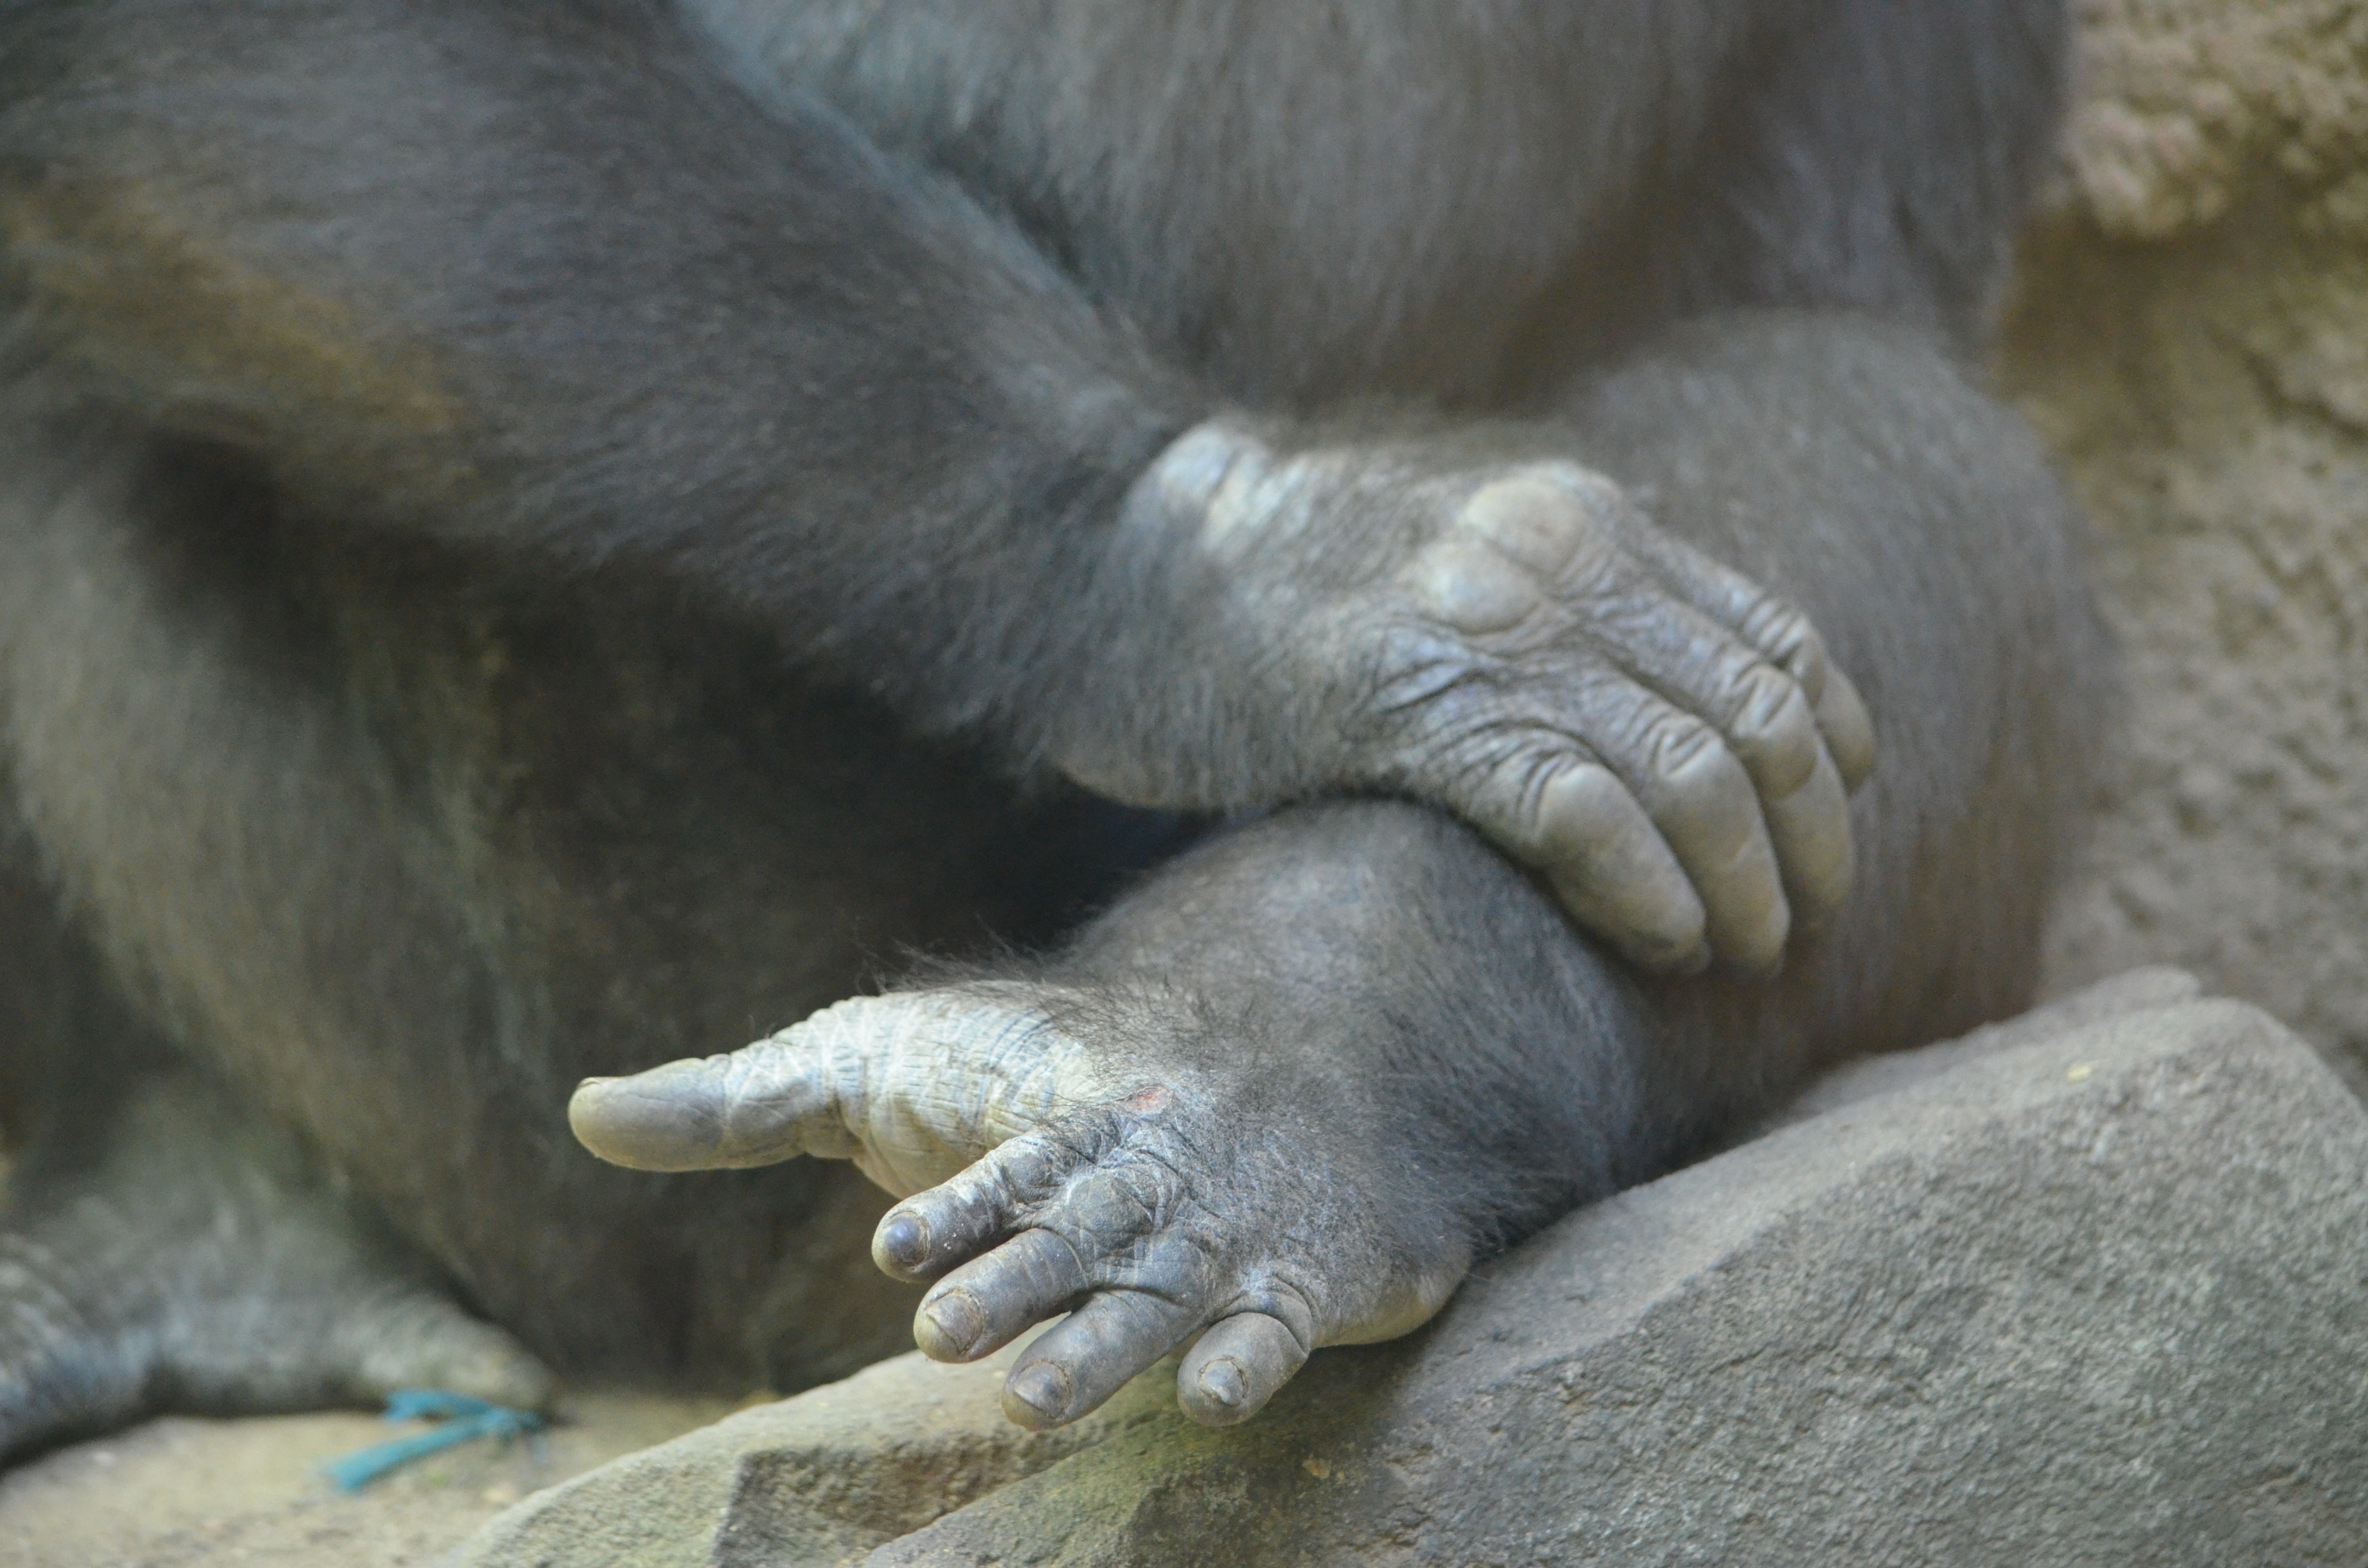 Gorilla knuckles